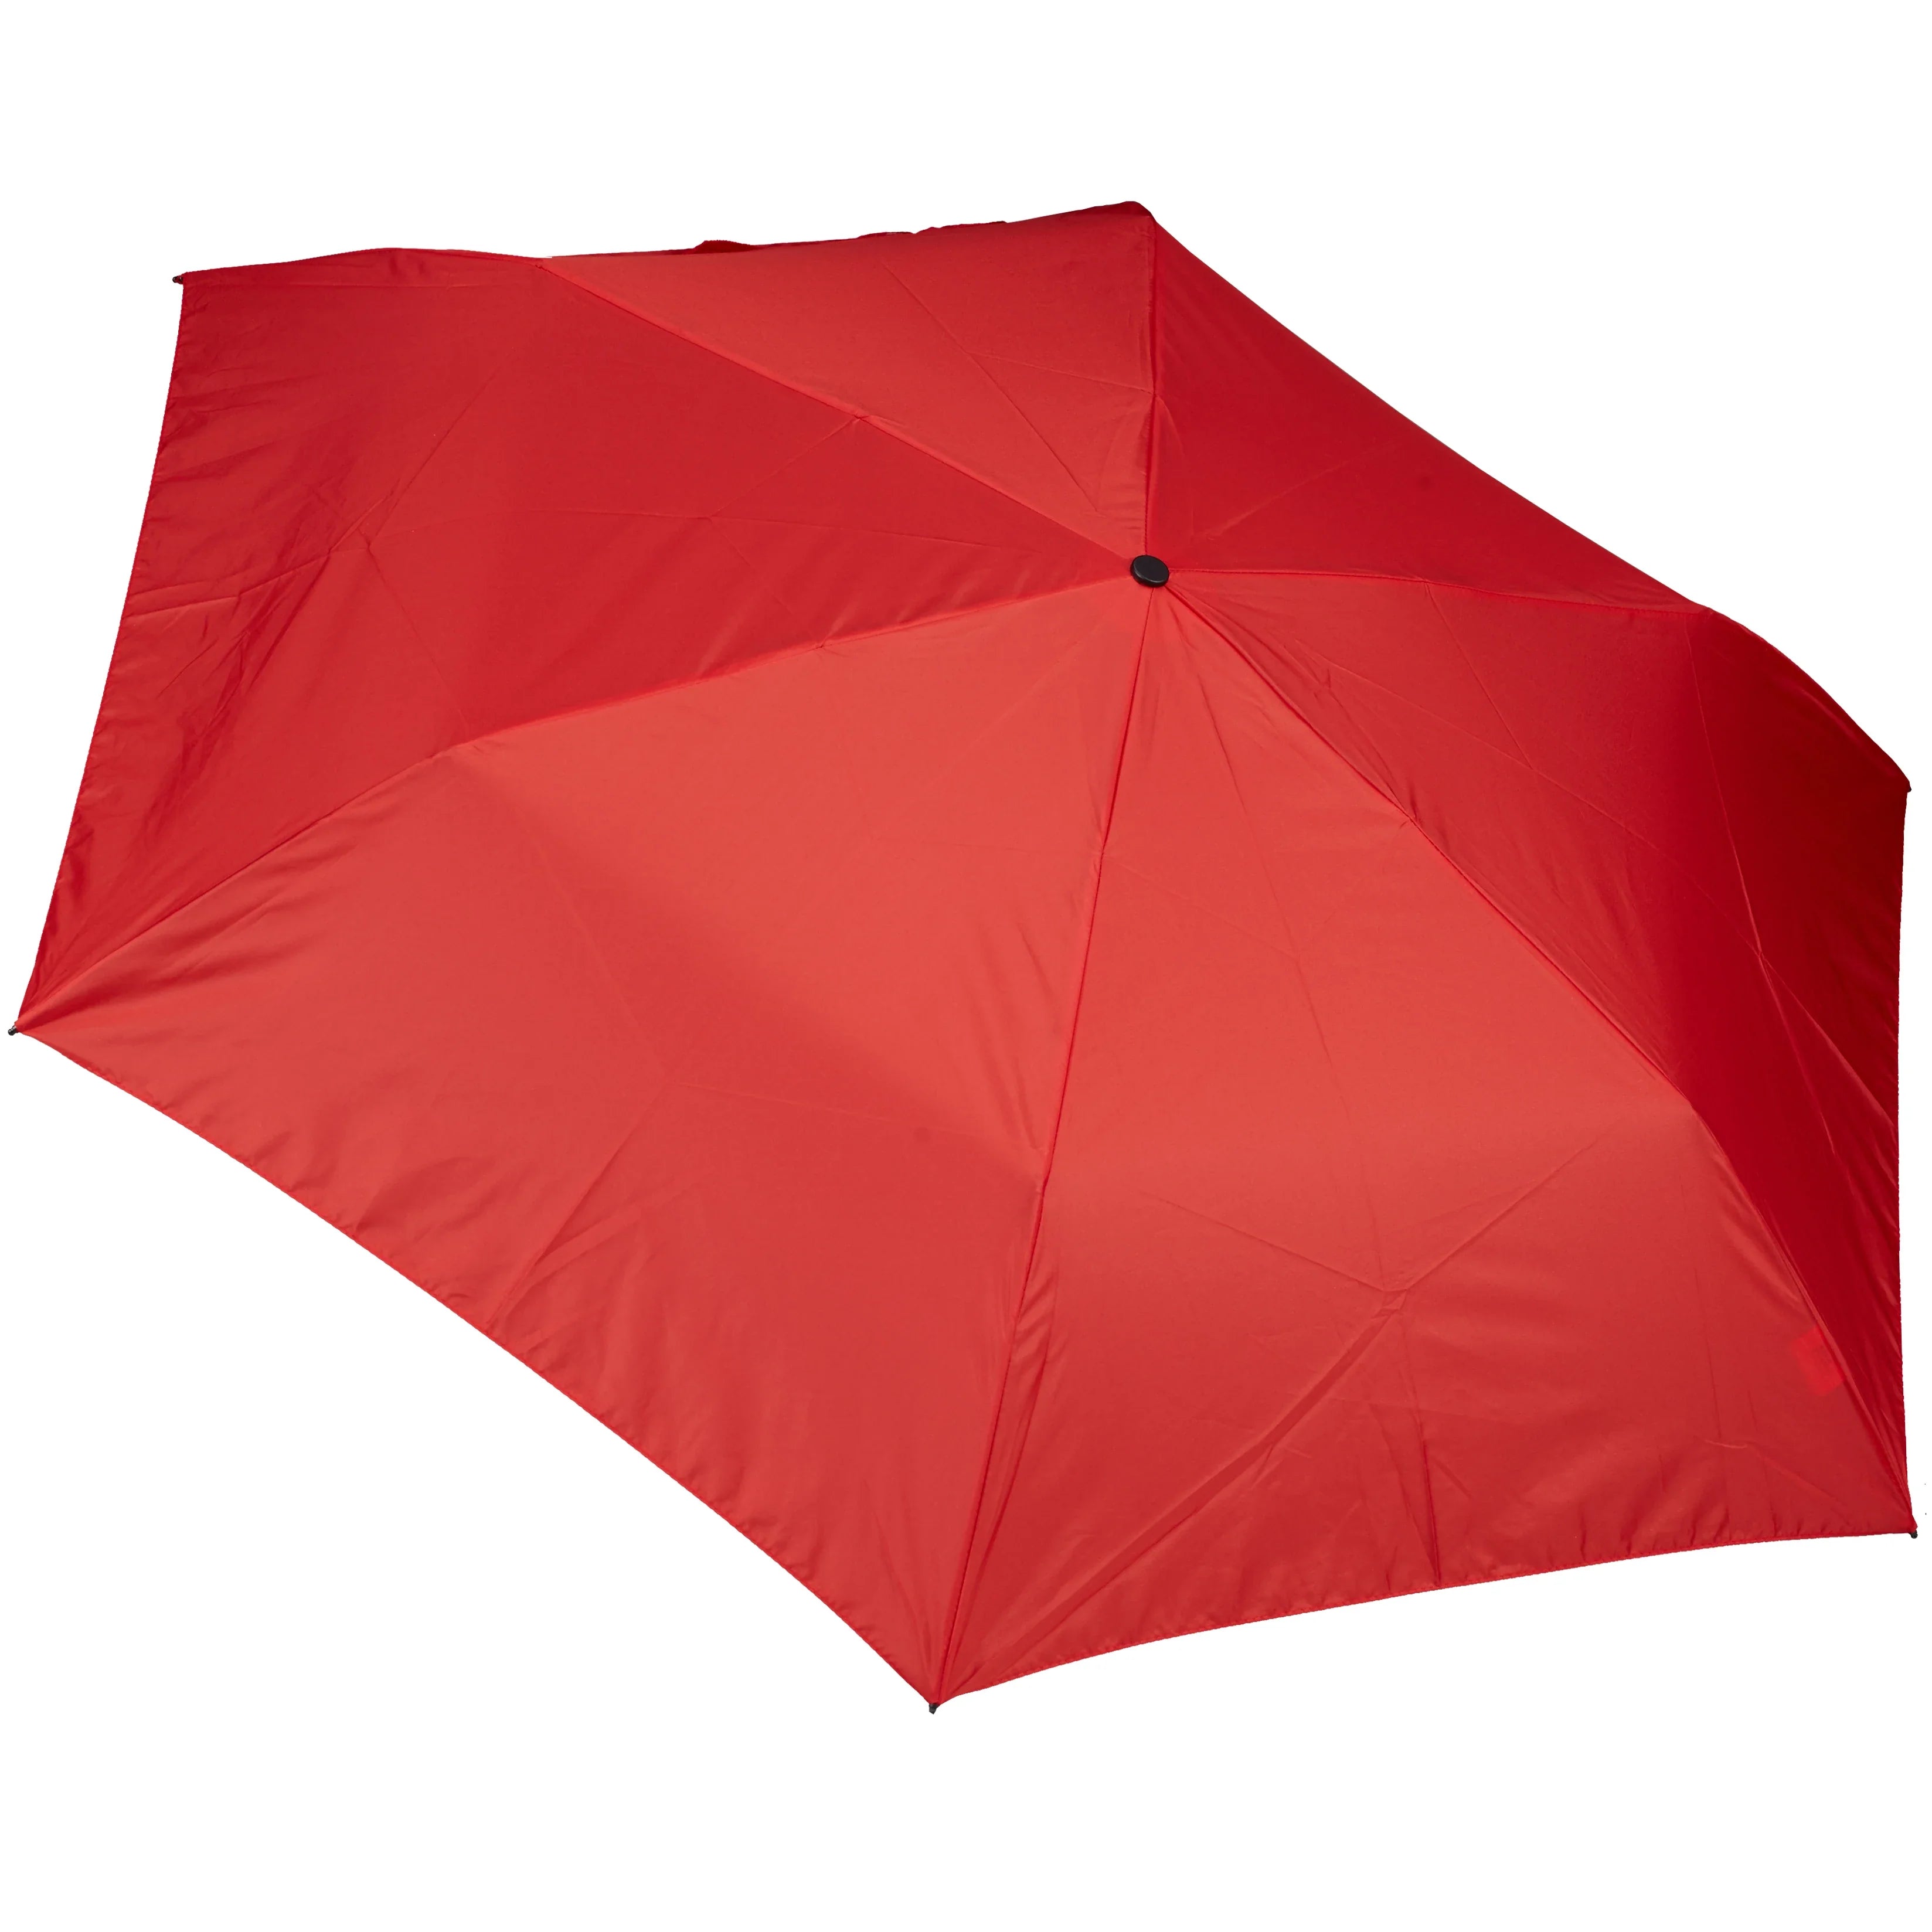 Doppler pocket umbrellas Zero99 pocket umbrella 21 cm - fiery red